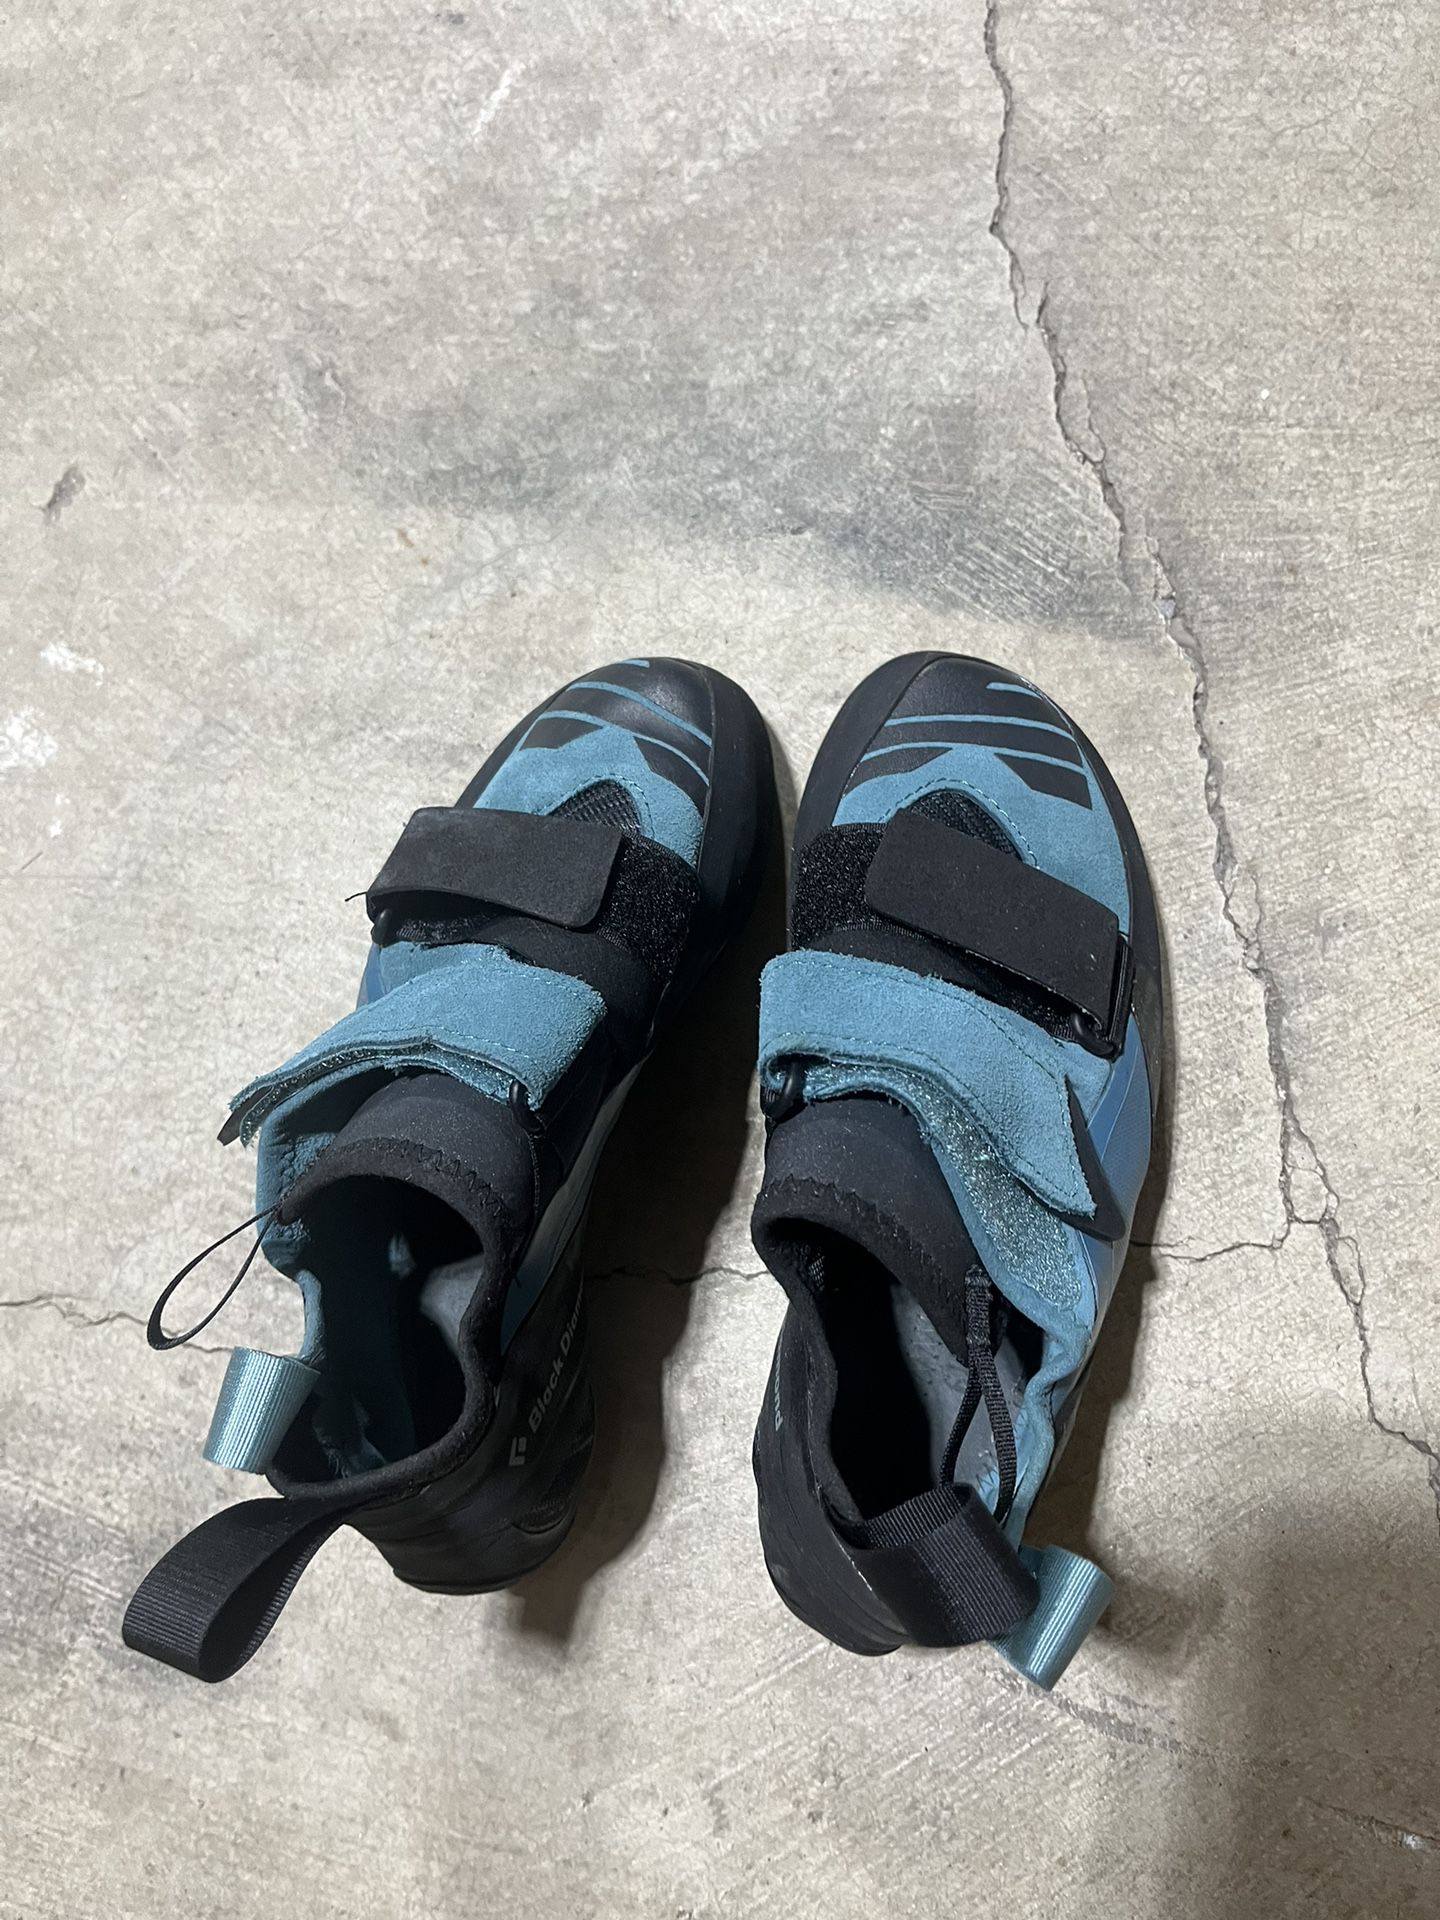 Black Diamond rock climbing shoes (brand new)—$30 